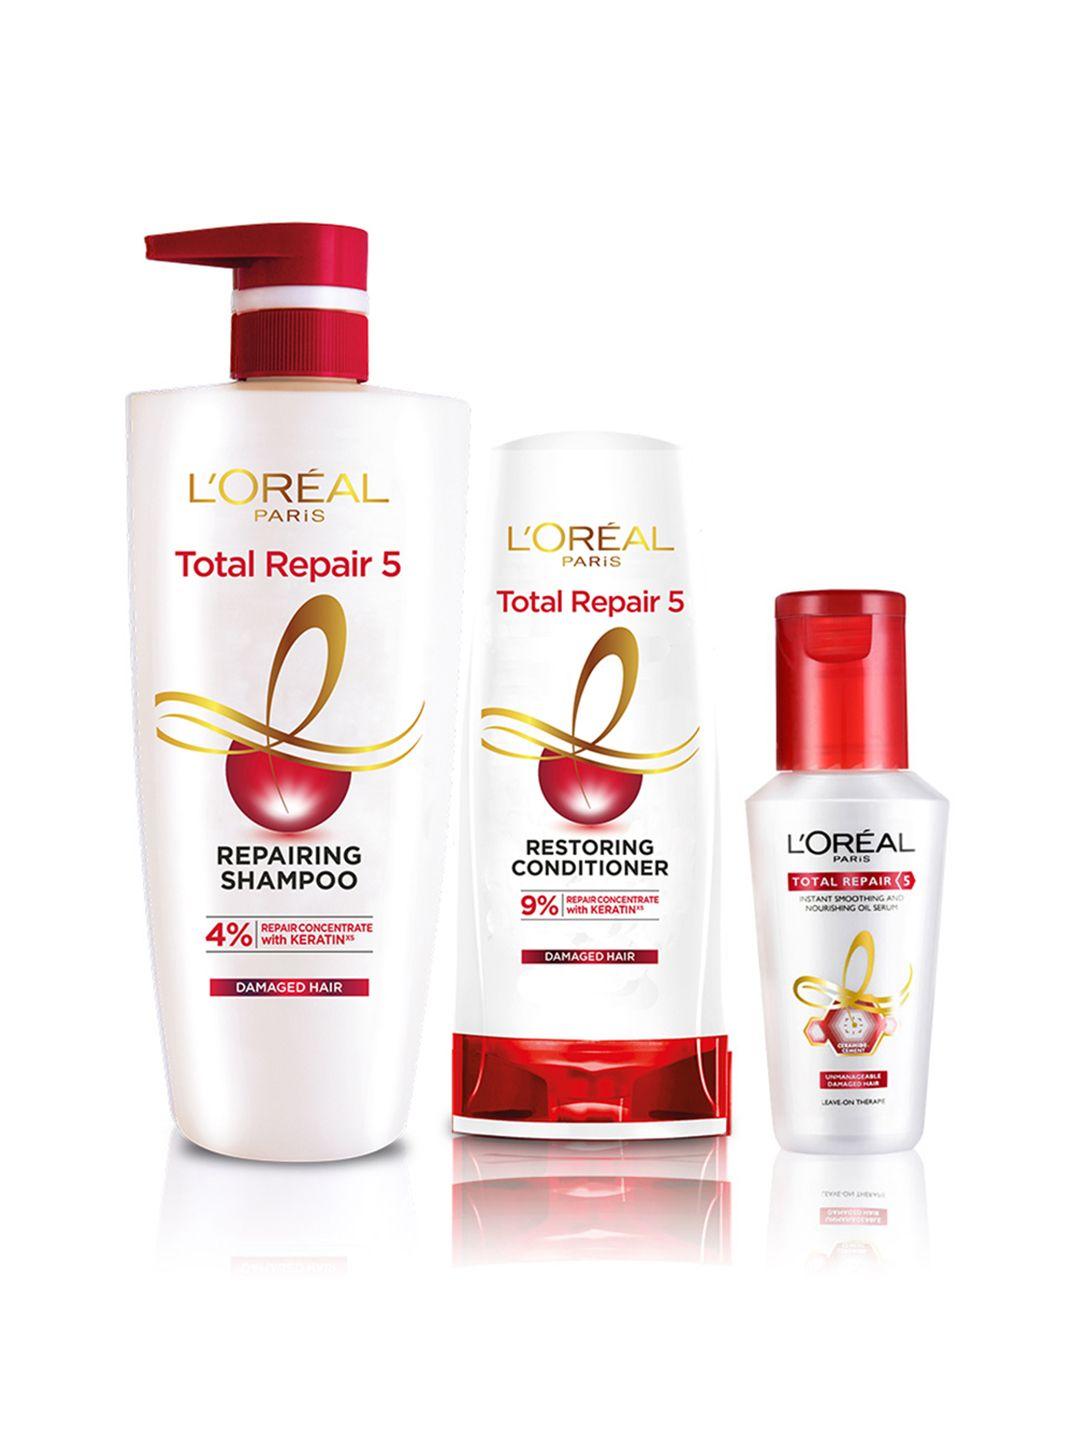 l'oreal-paris-total-repair-5-shampoo-650-ml,-conditioner-180-ml-&-serum-40-ml-combo